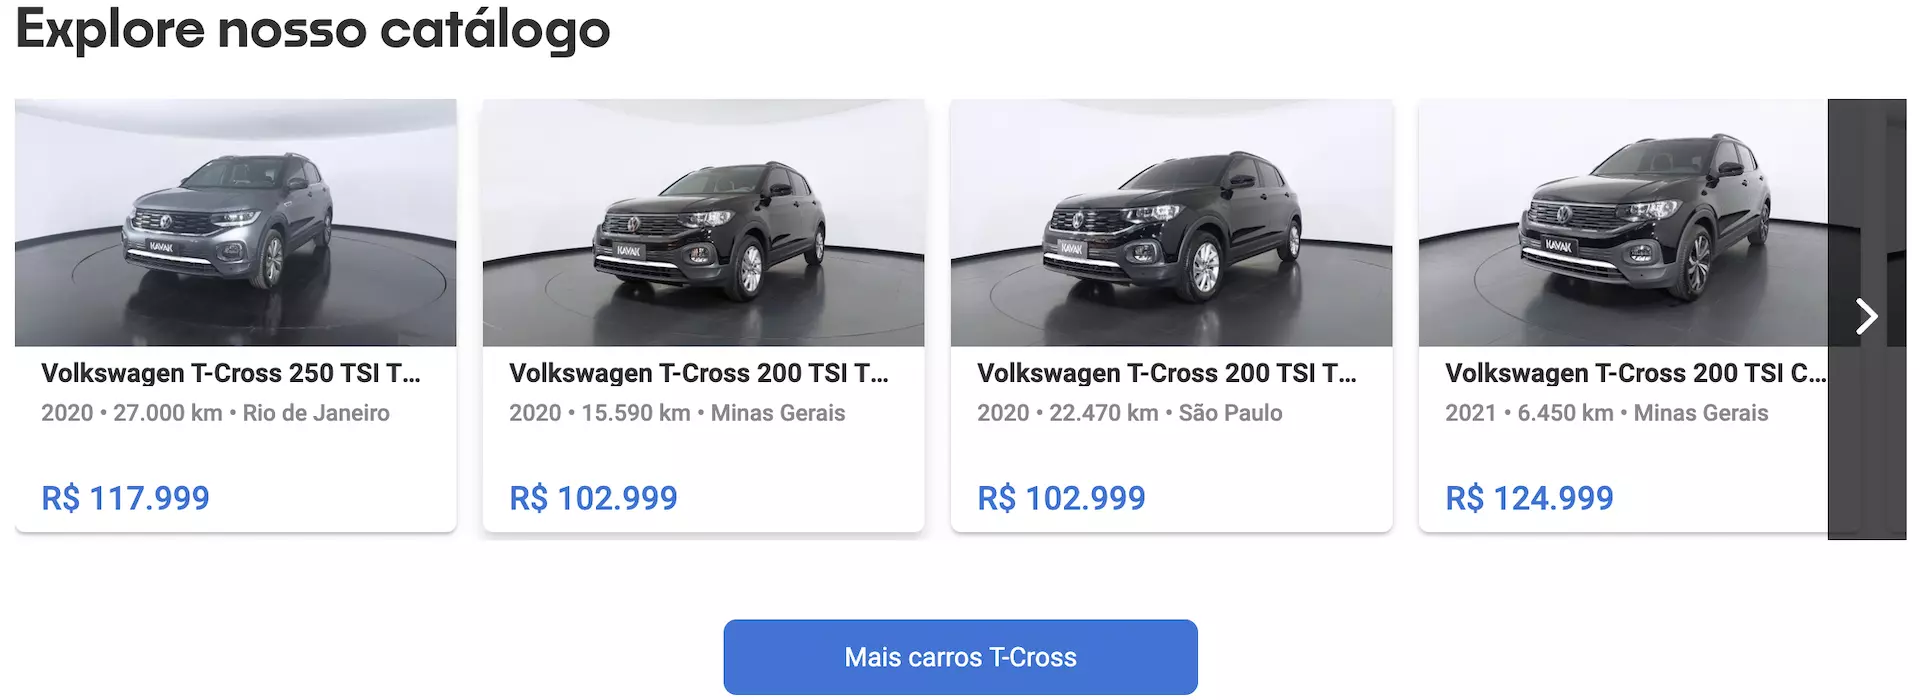 VW T-Cross preço